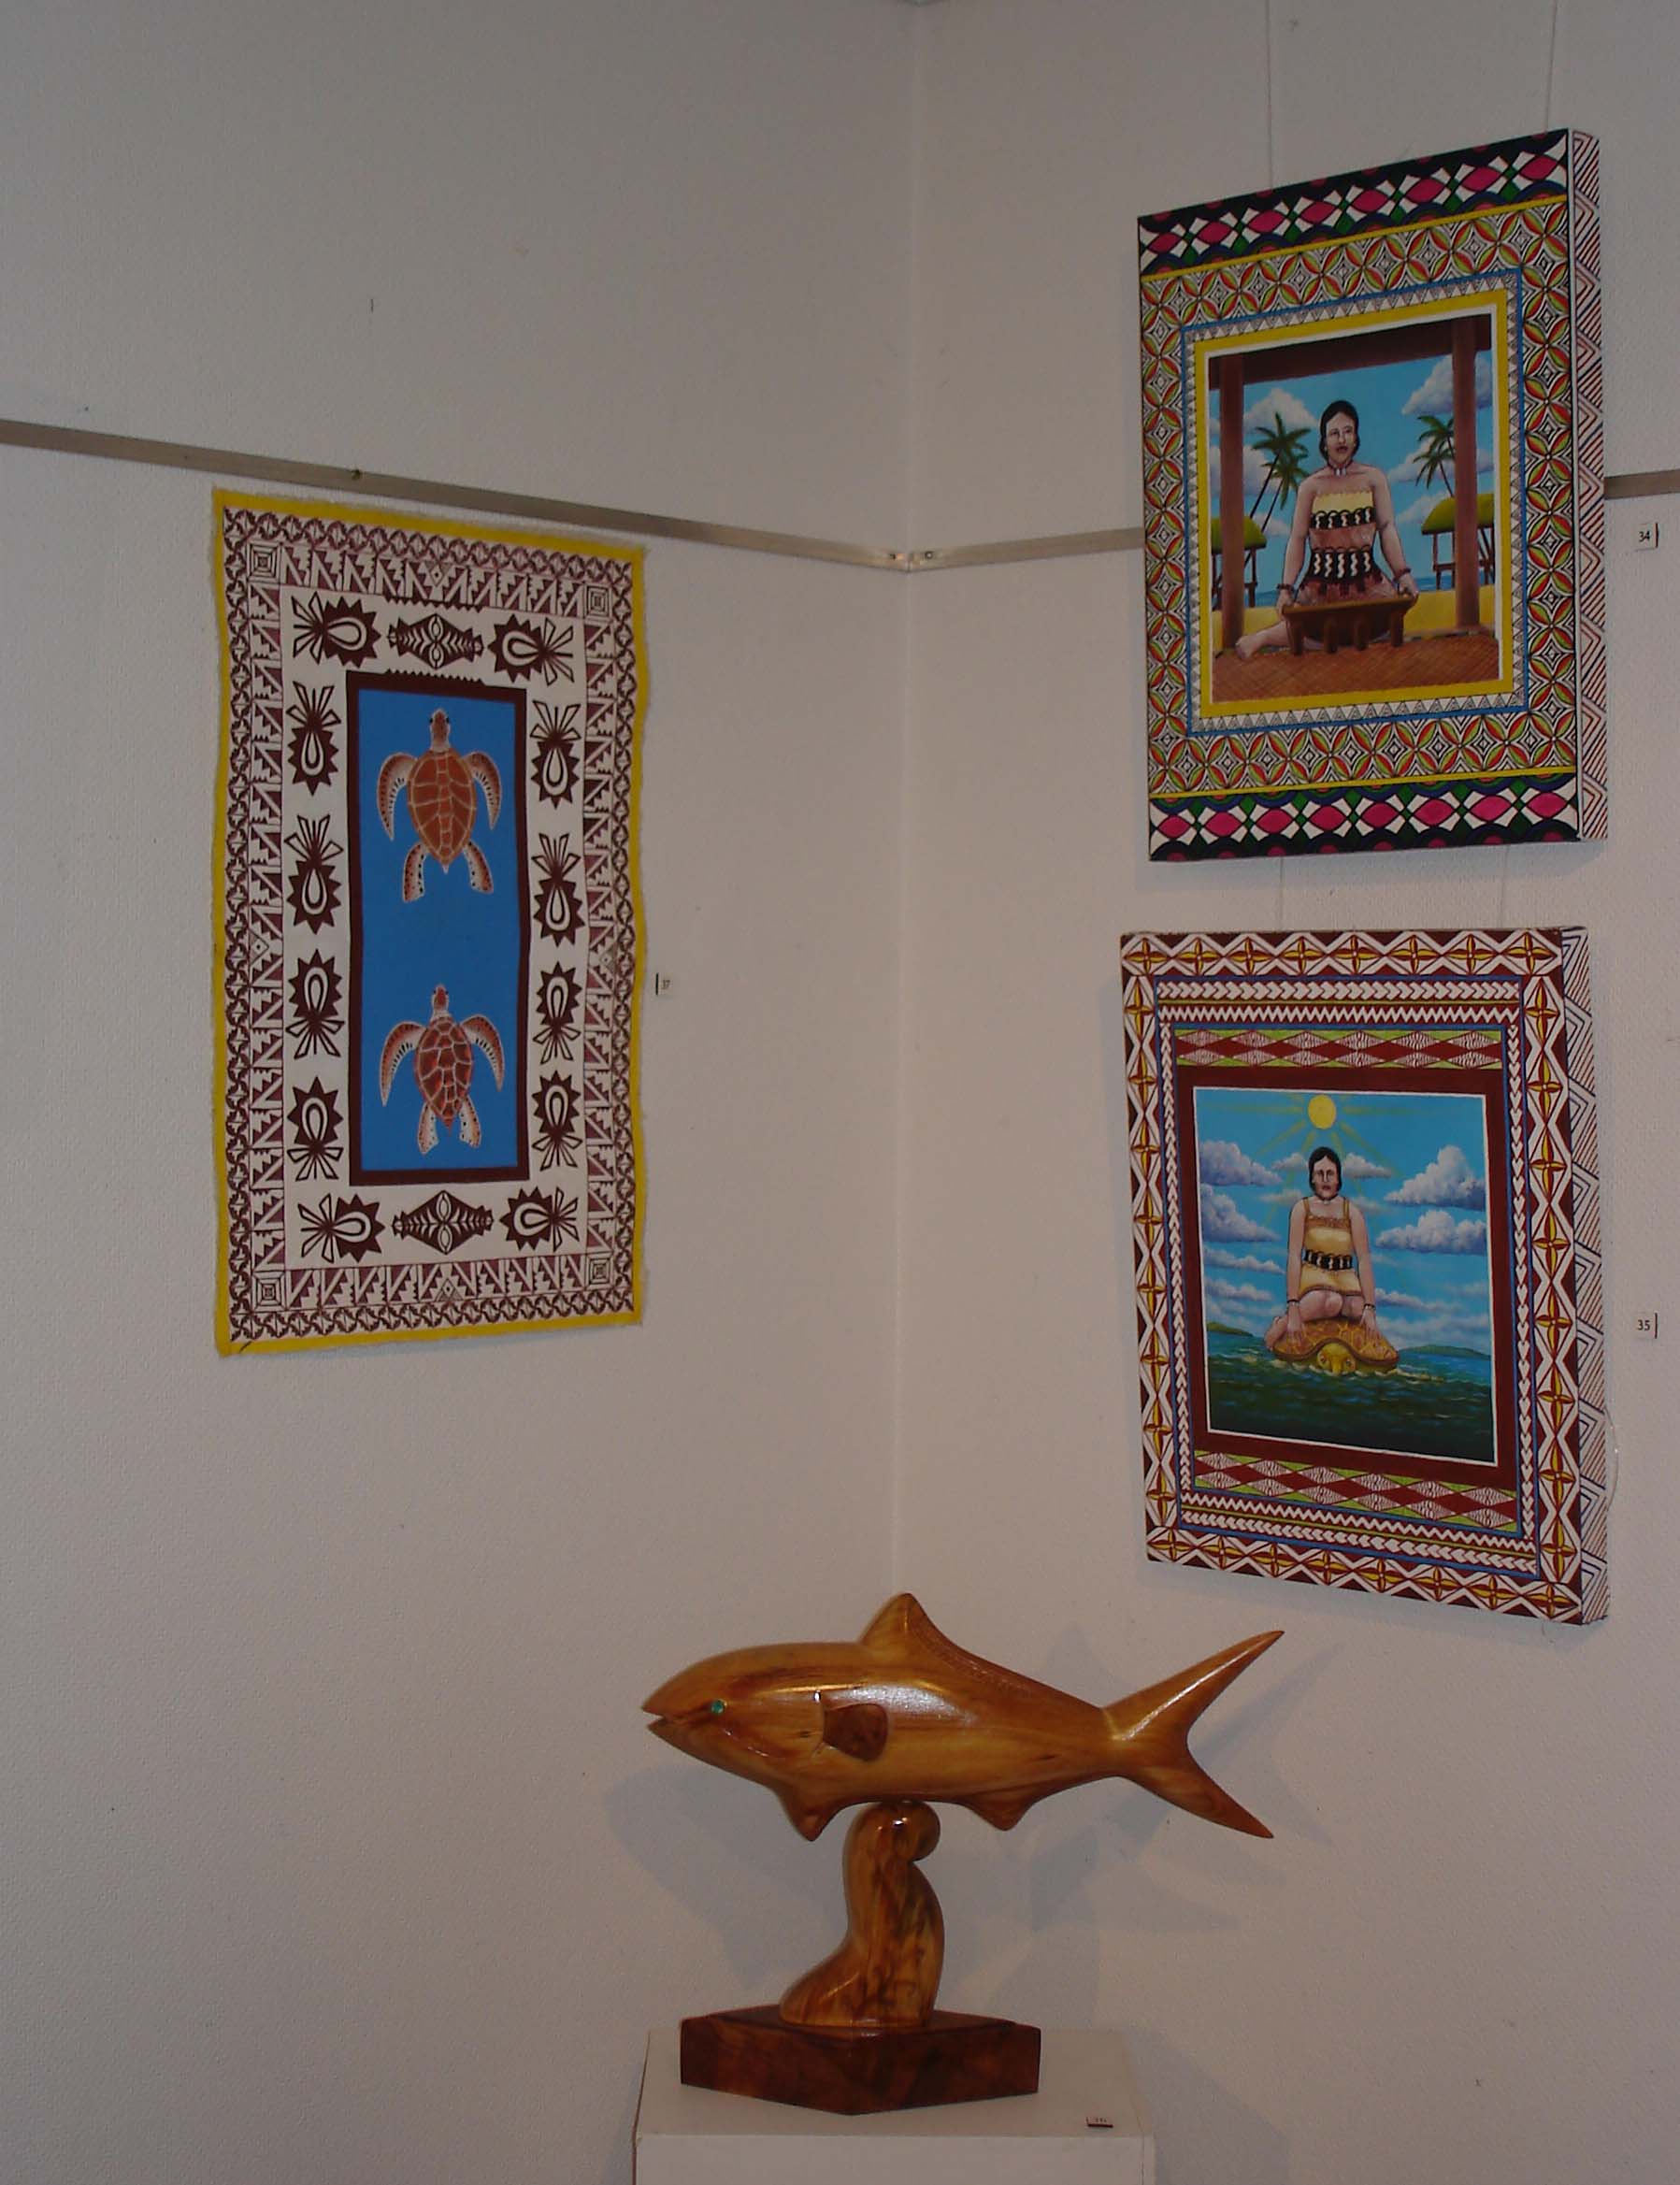 Artwork on display in "InsideOut", Mairangi Arts Centre